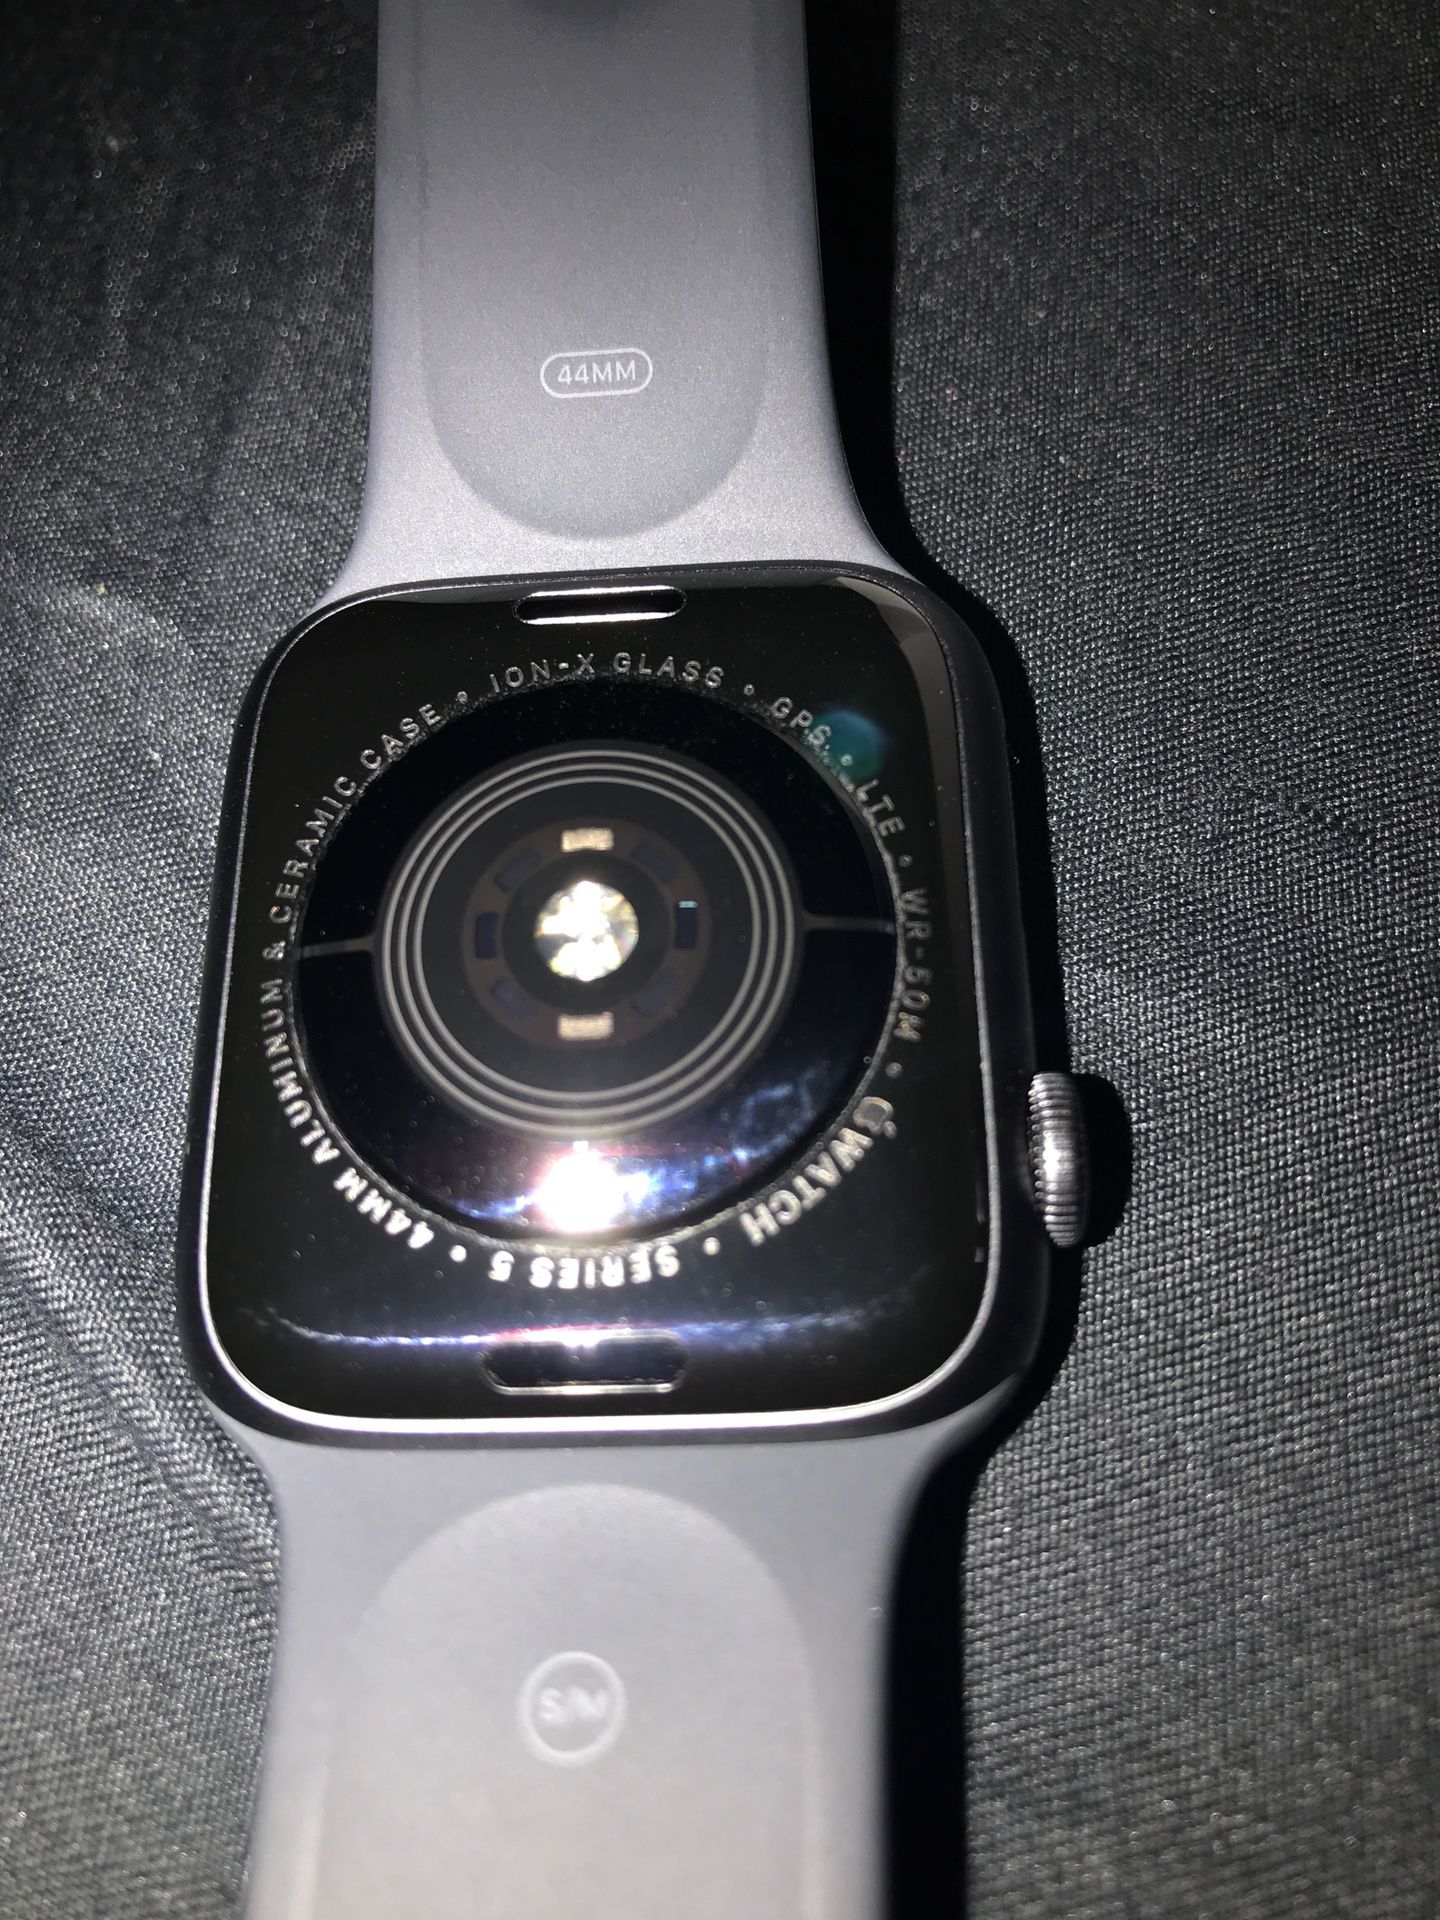 Brand new Apple Watch series 5